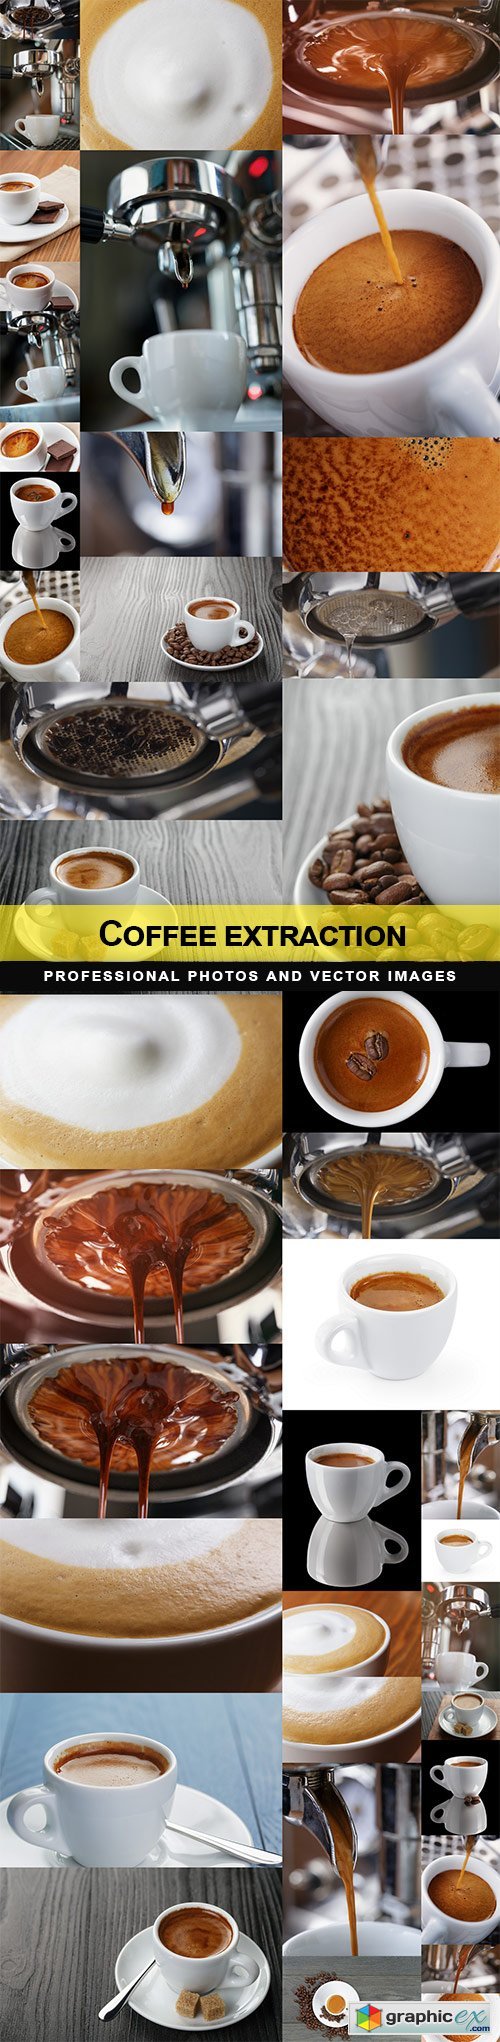 Coffee extraction